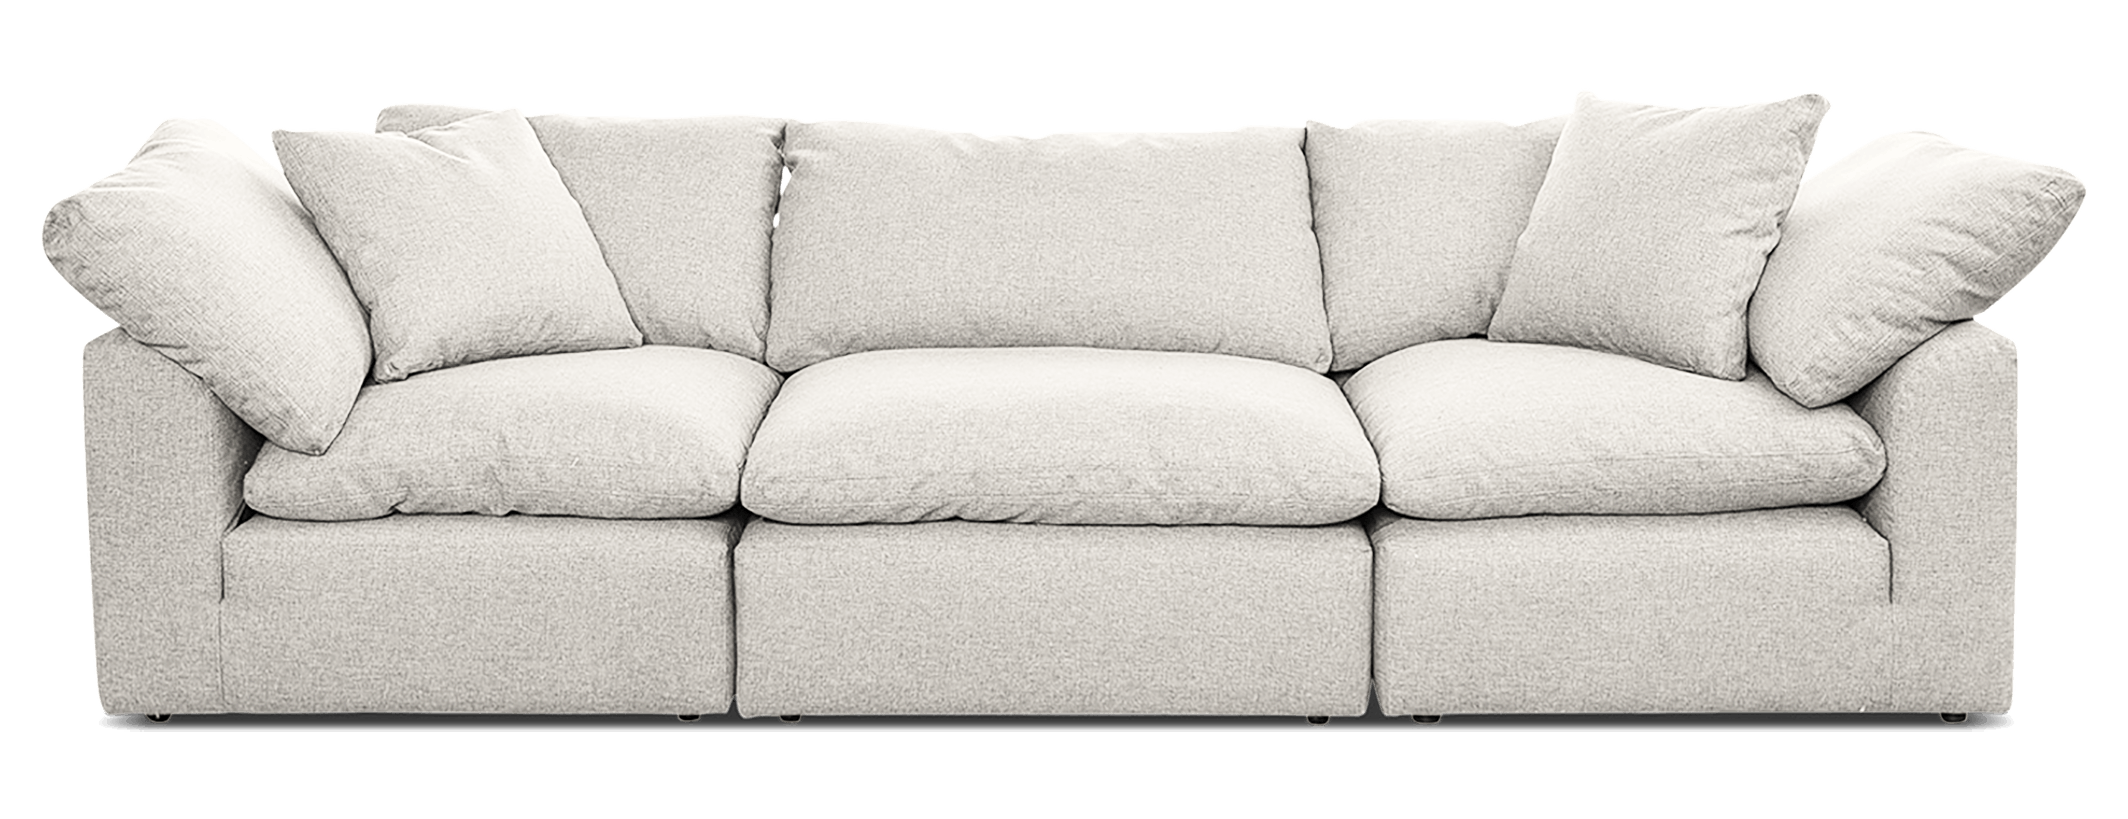 bryant modular sofa %283 piece%29 tussah snow